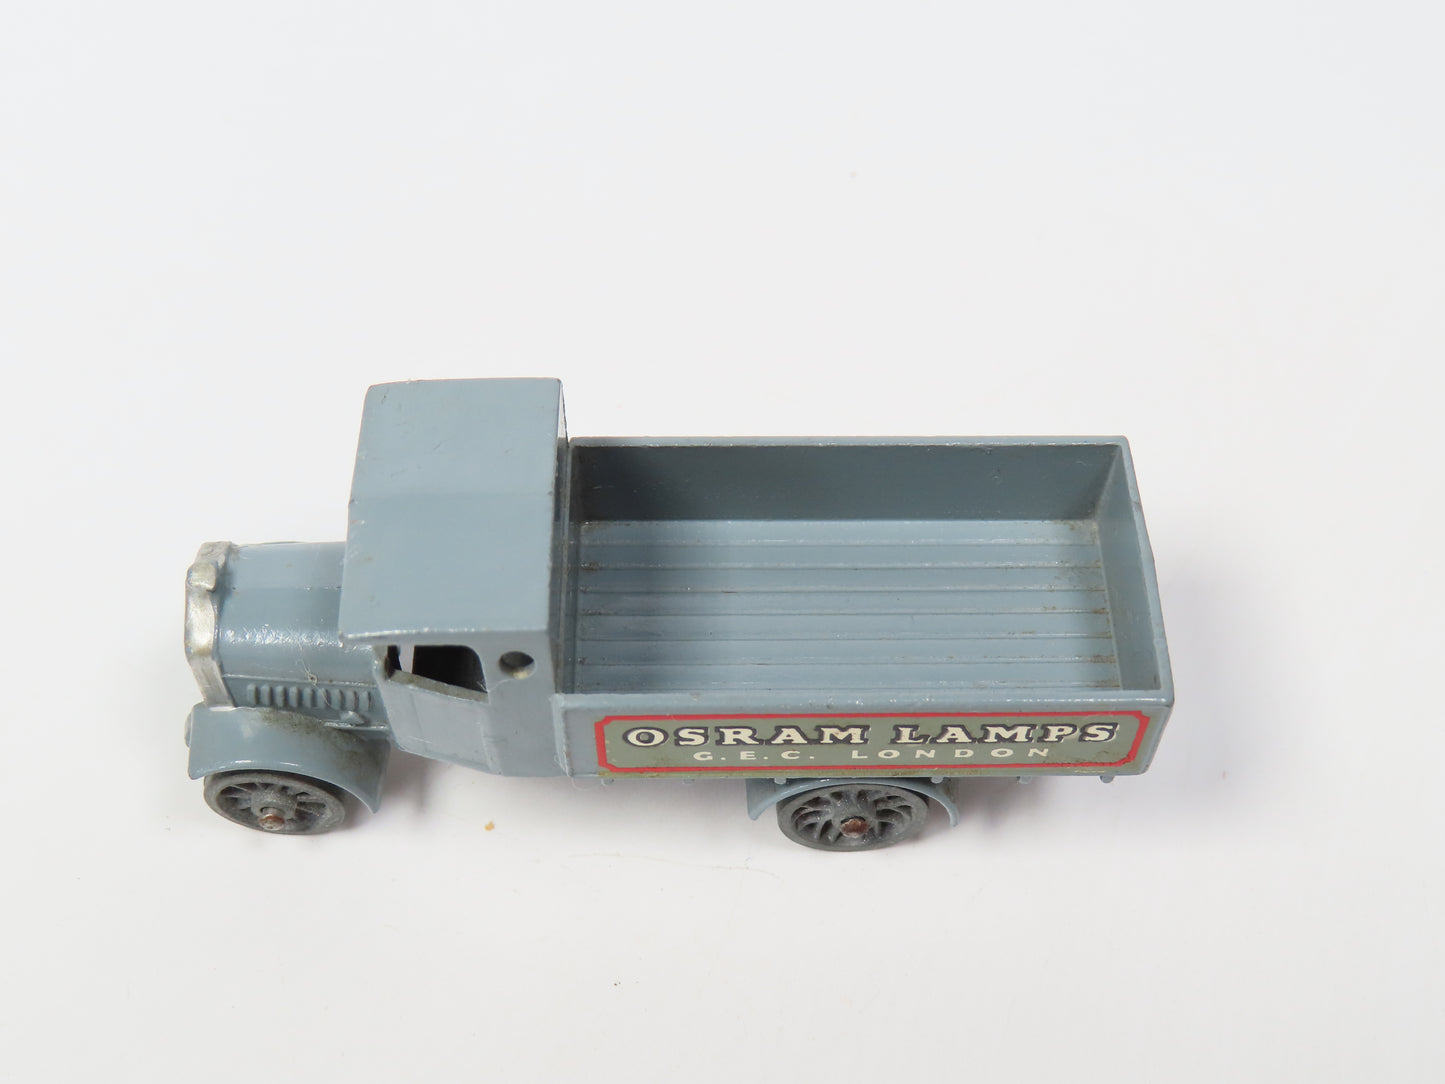 Matchbox Yesteryear No.6 1916 A.E.C. "Y" Type Lorry, scarce DARK GREY version!